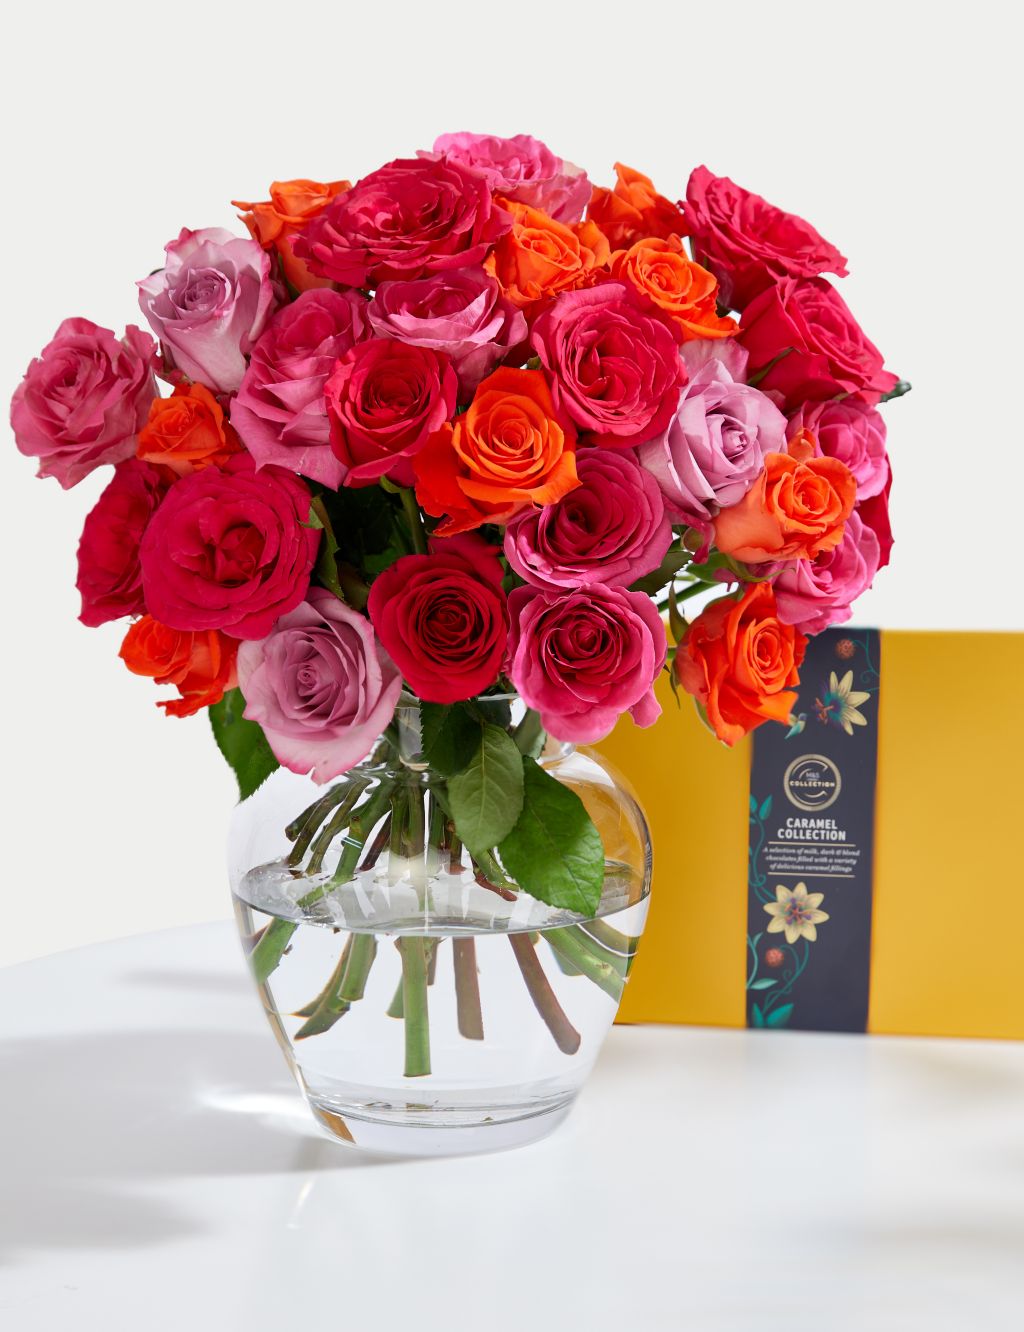 Radiant Rose Abundance with Caramel Collection